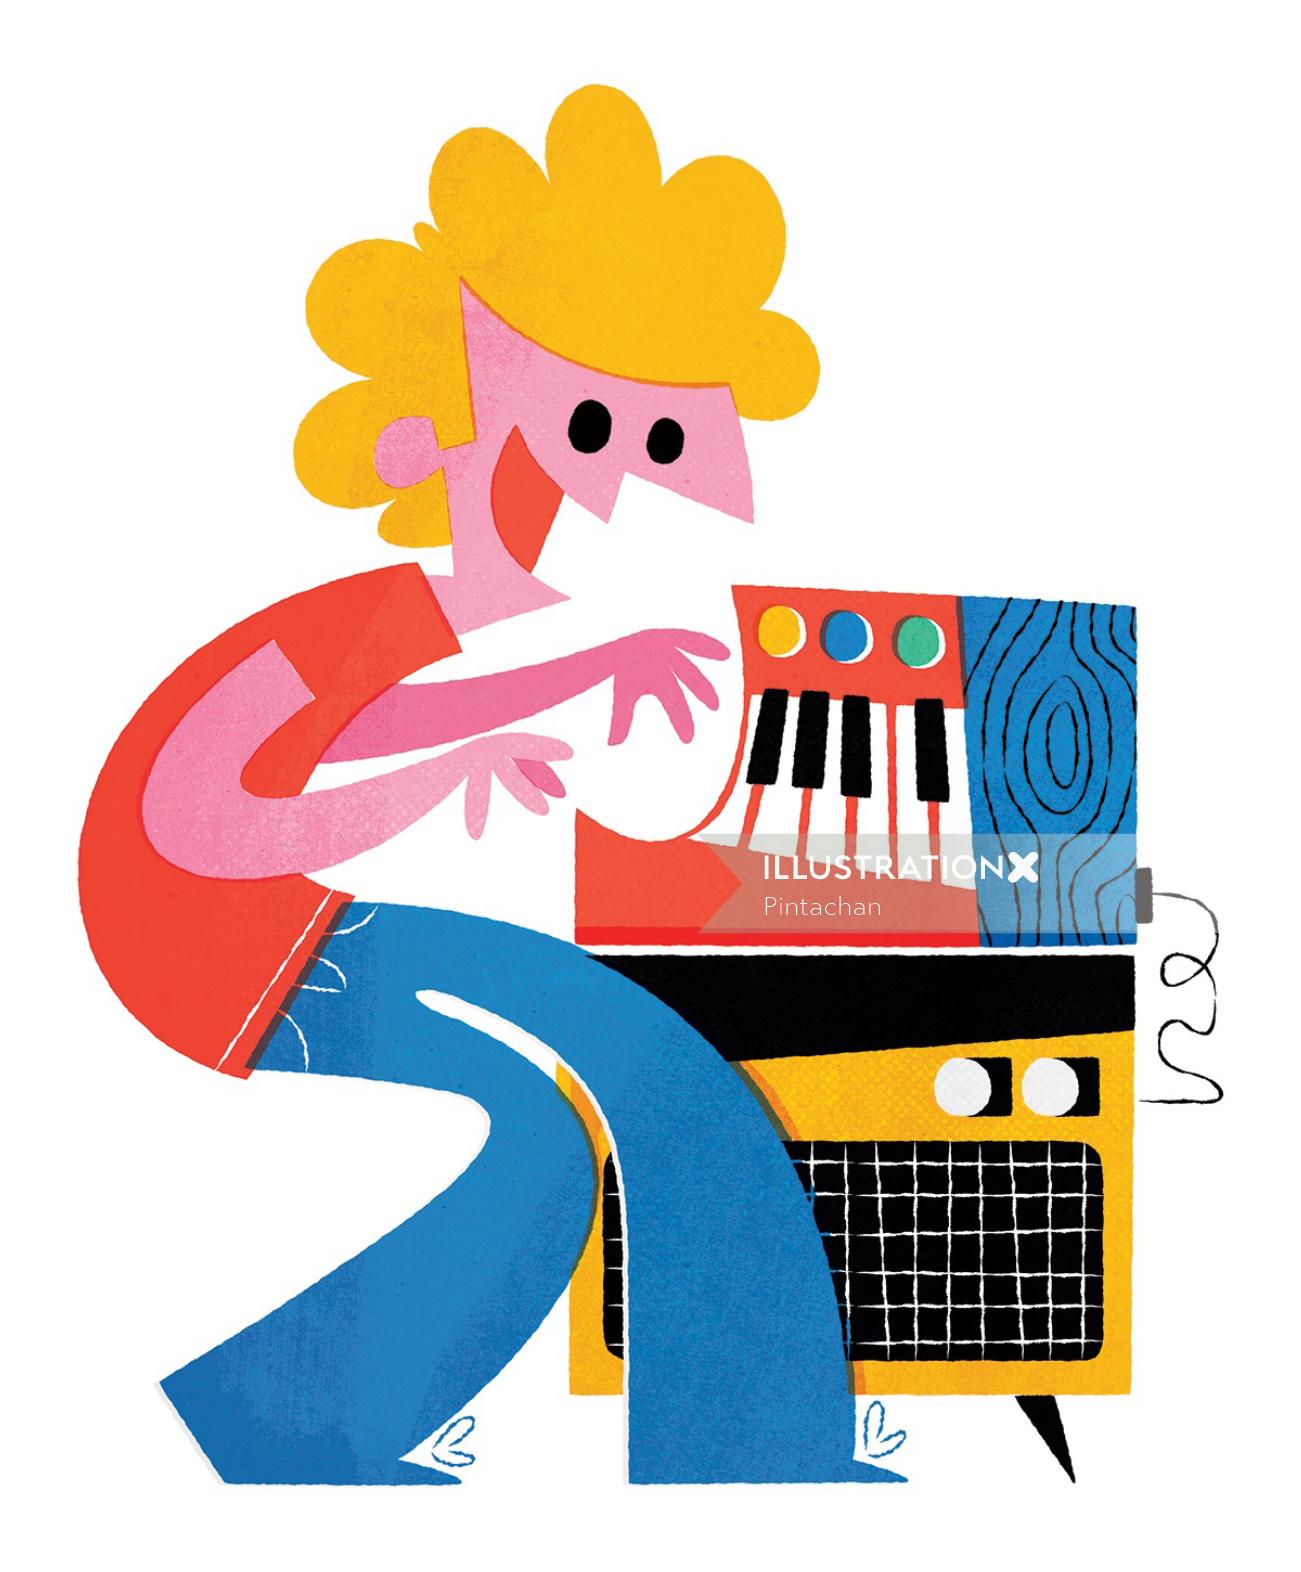 Man playing piano digital illustration